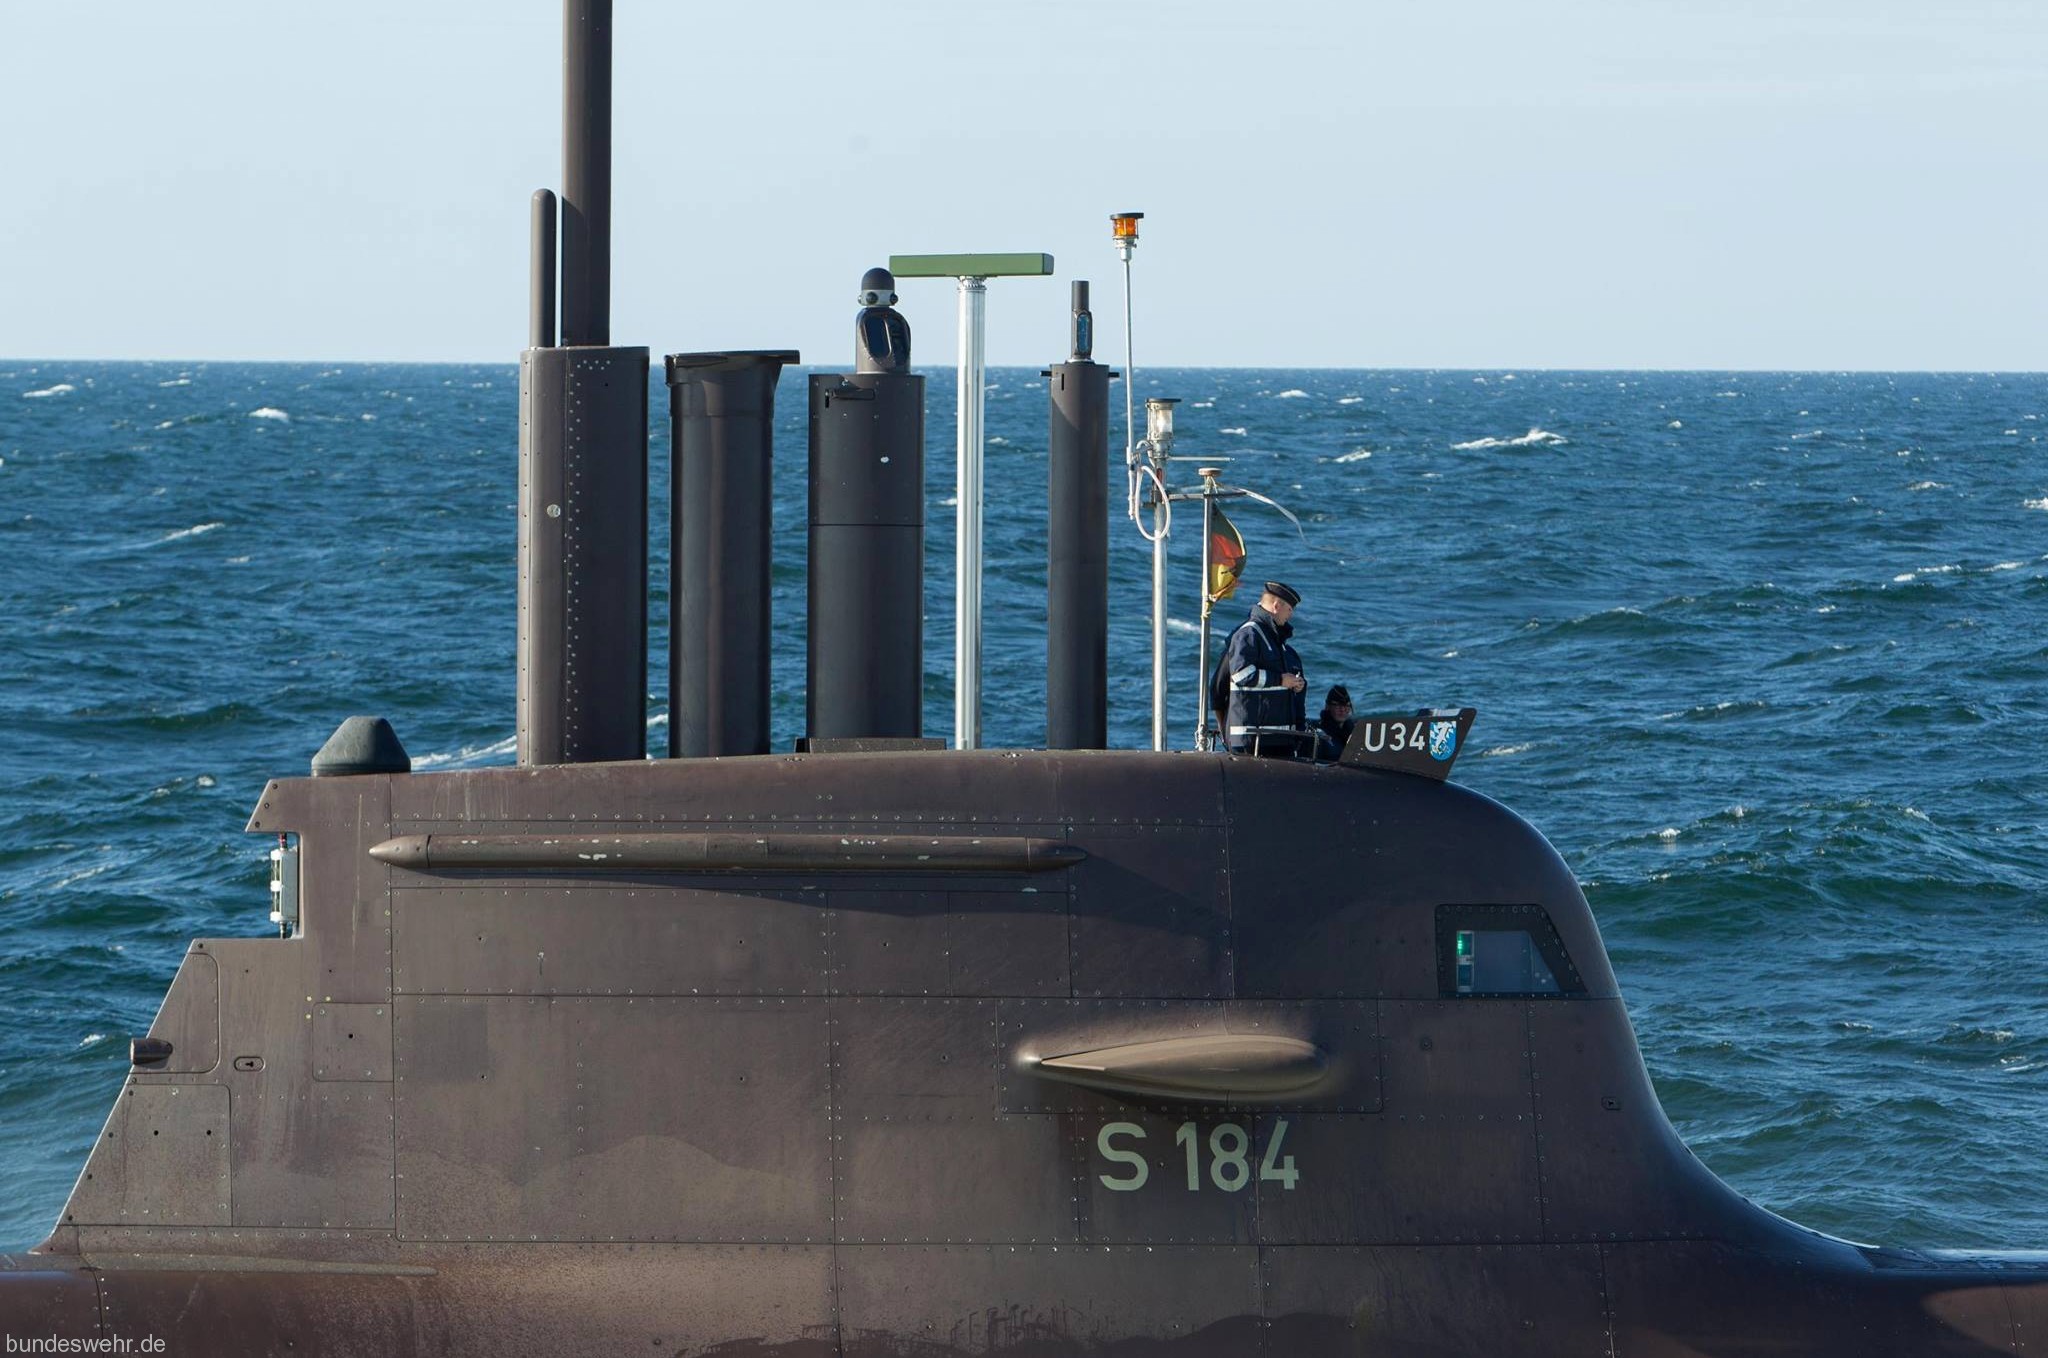 s-184 fgs u34 type 212a class submarine german navy 04